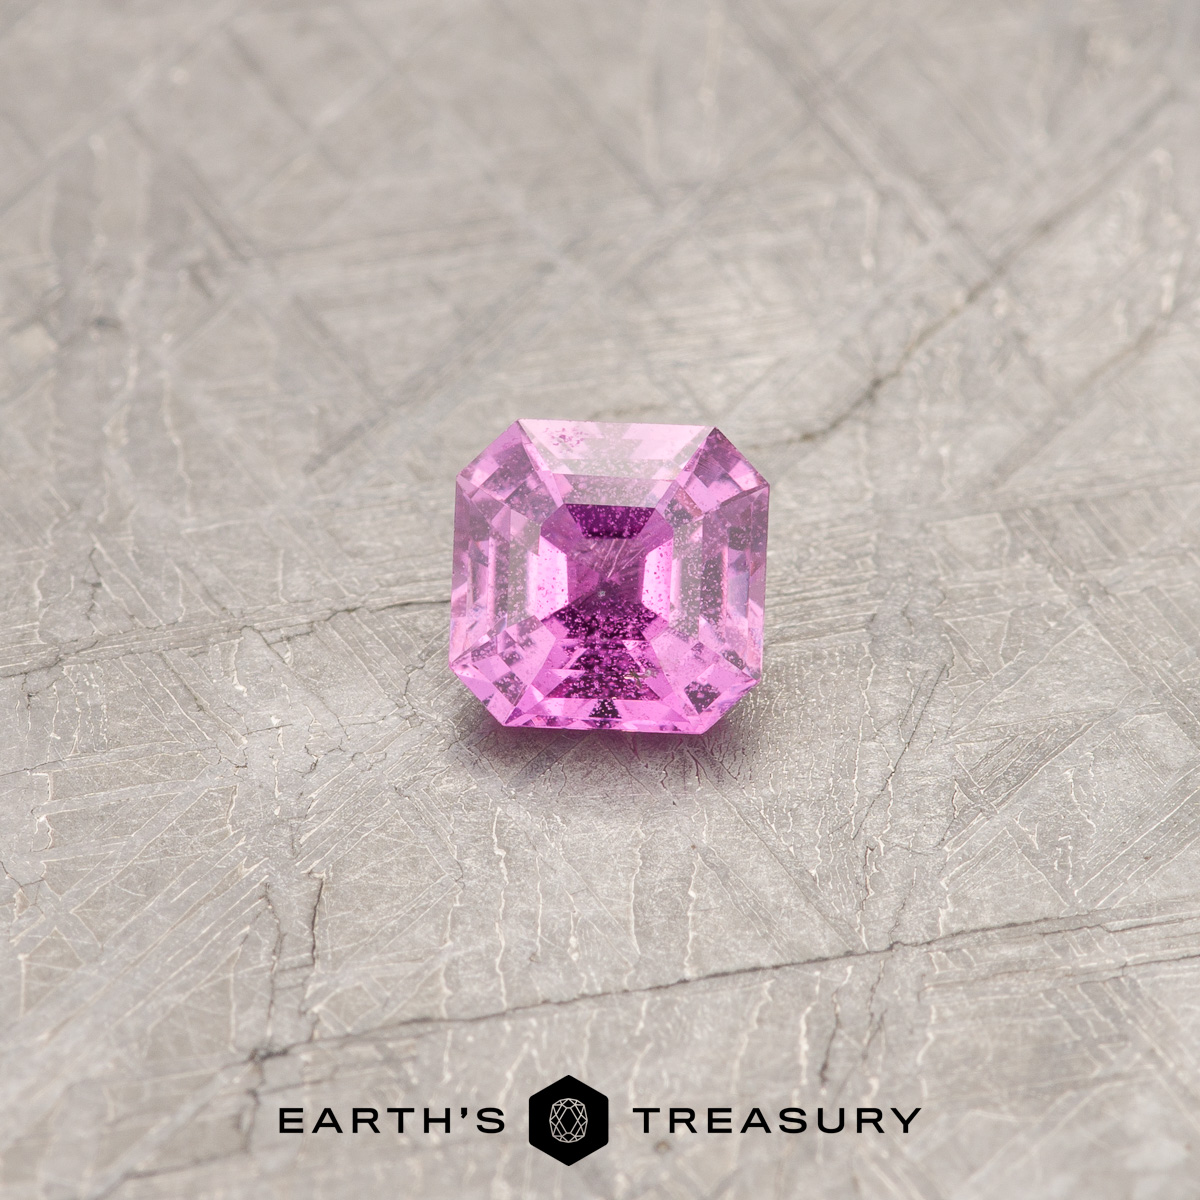 A hot pink sapphire in a classic asscher-style square design